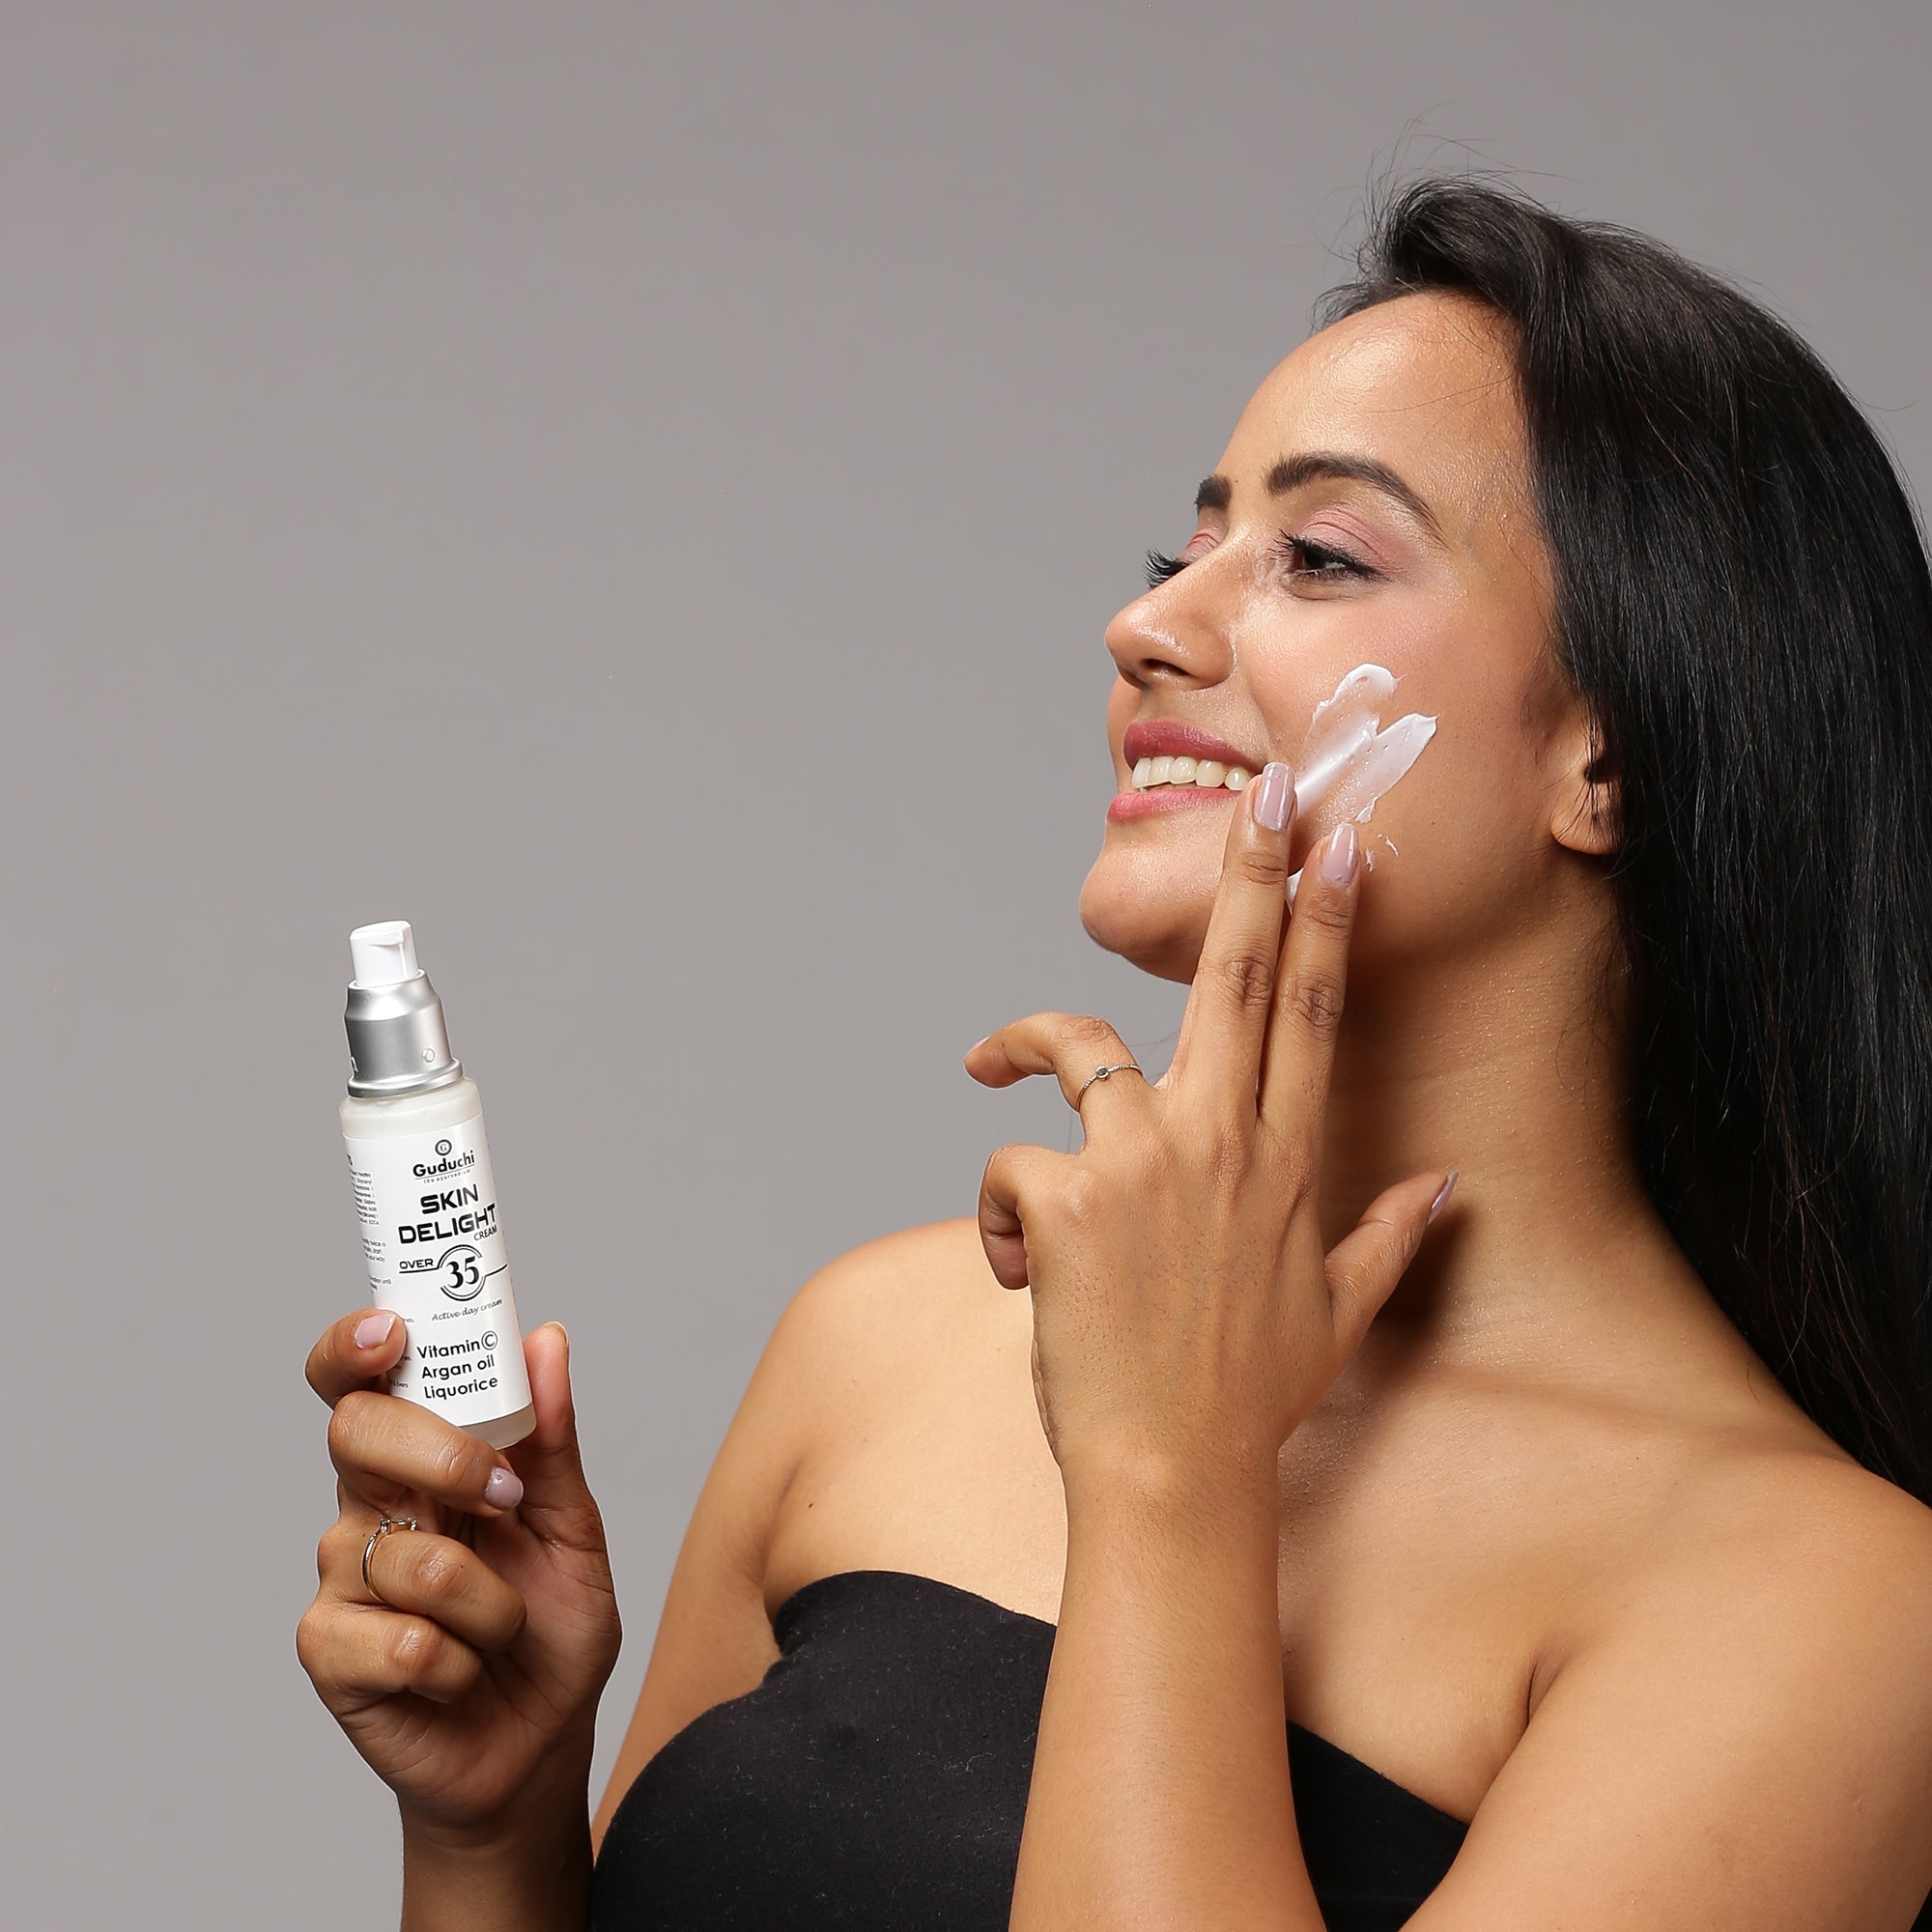 Guduchi Ayurveda Over 35 Premium skin care cream with Vitamin C, Argan Oil and Liquorice. - Guduchi Ayurveda